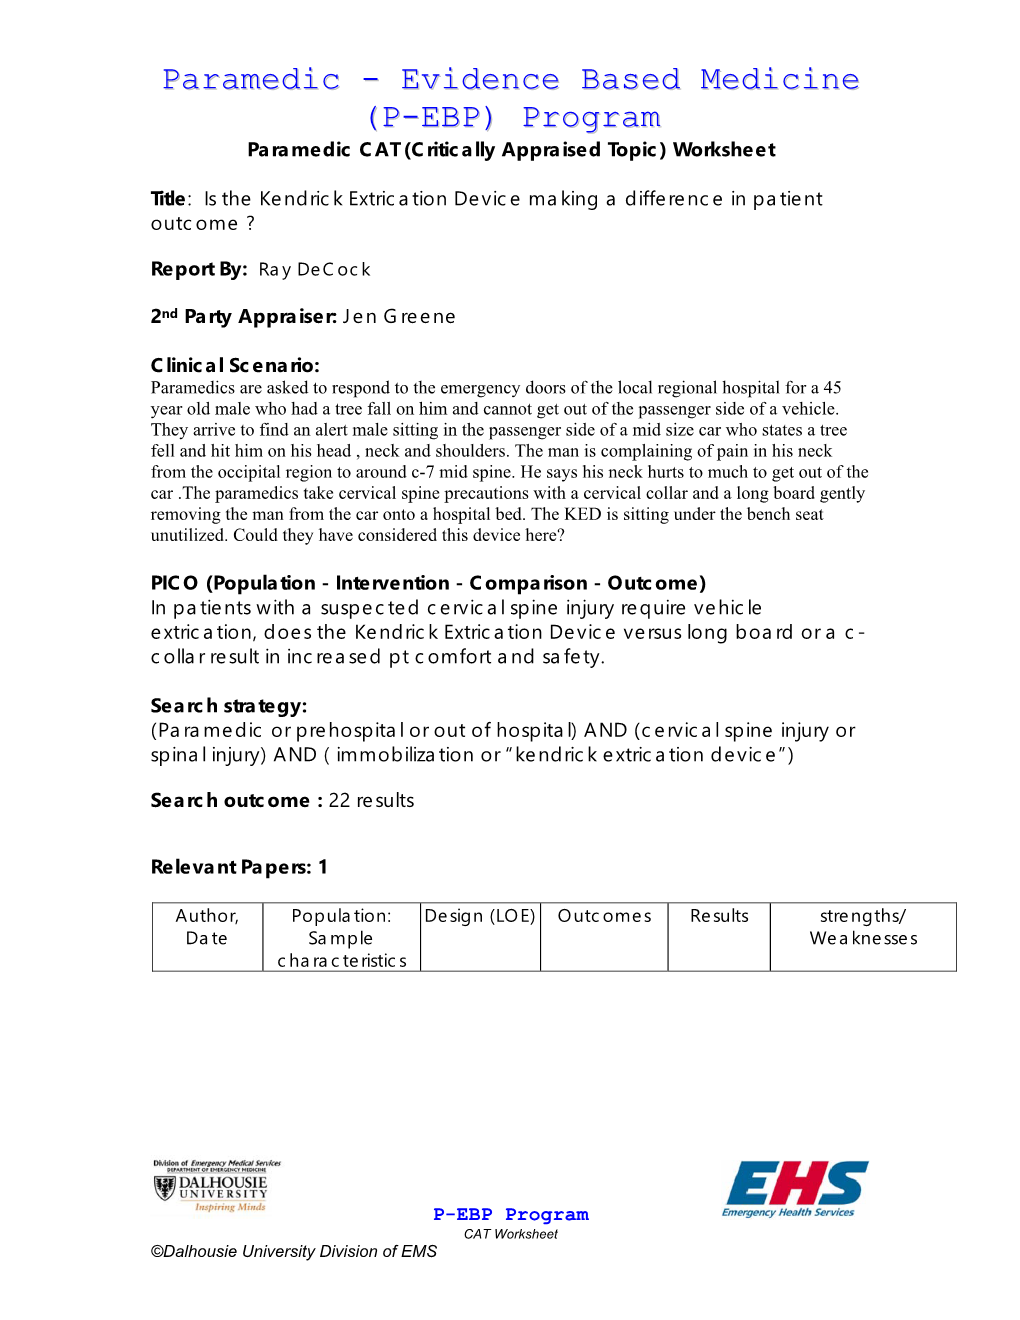 Paramedic - Evidence Based Medicine (P-EBP) Program Paramedic CAT (Critically Appraised Topic) Worksheet